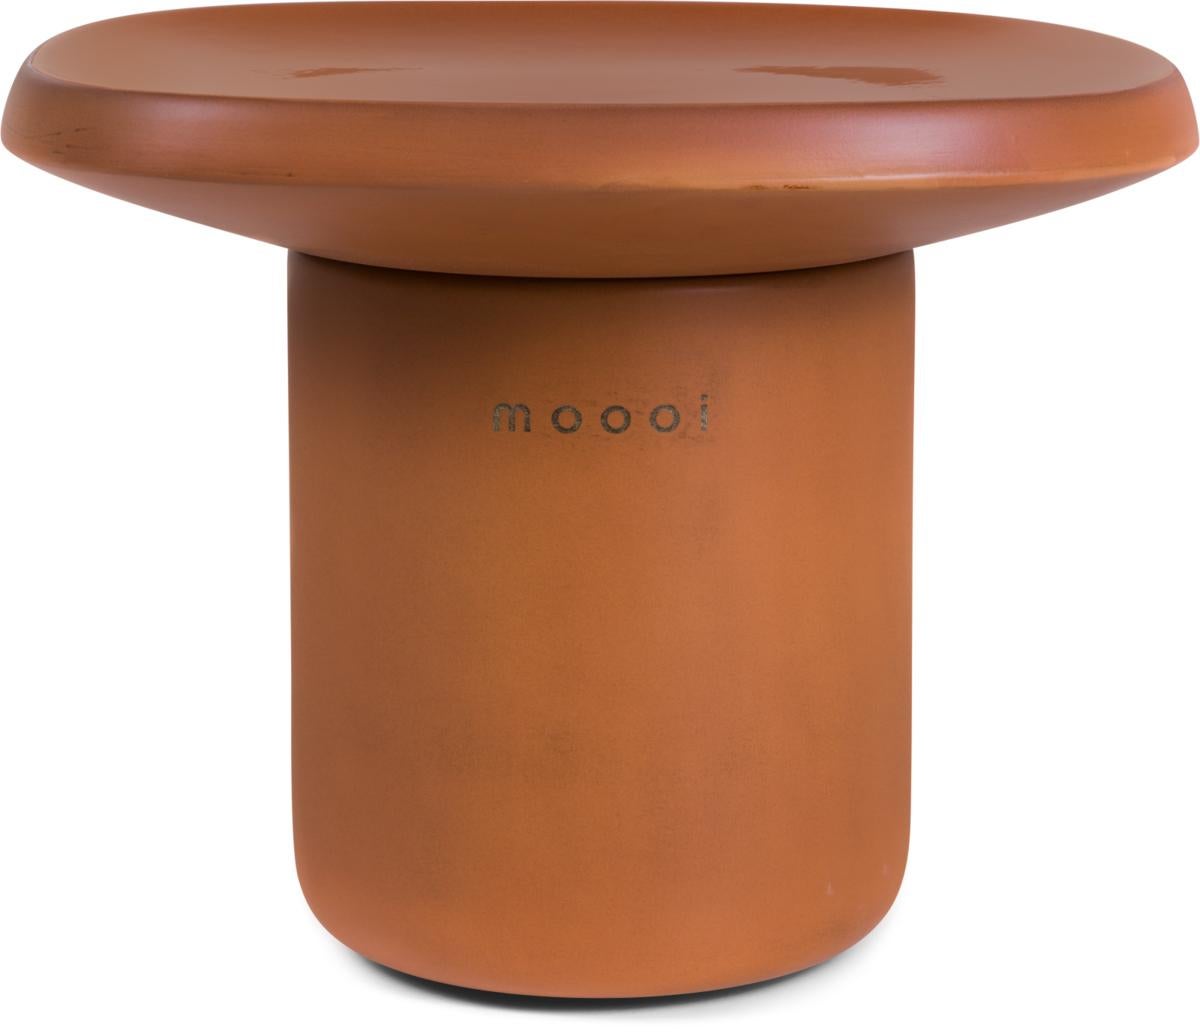 Moooi Obon Rectangular Low Ceramic Table in Terracotta Finish by Simone Bonanni For Sale 3